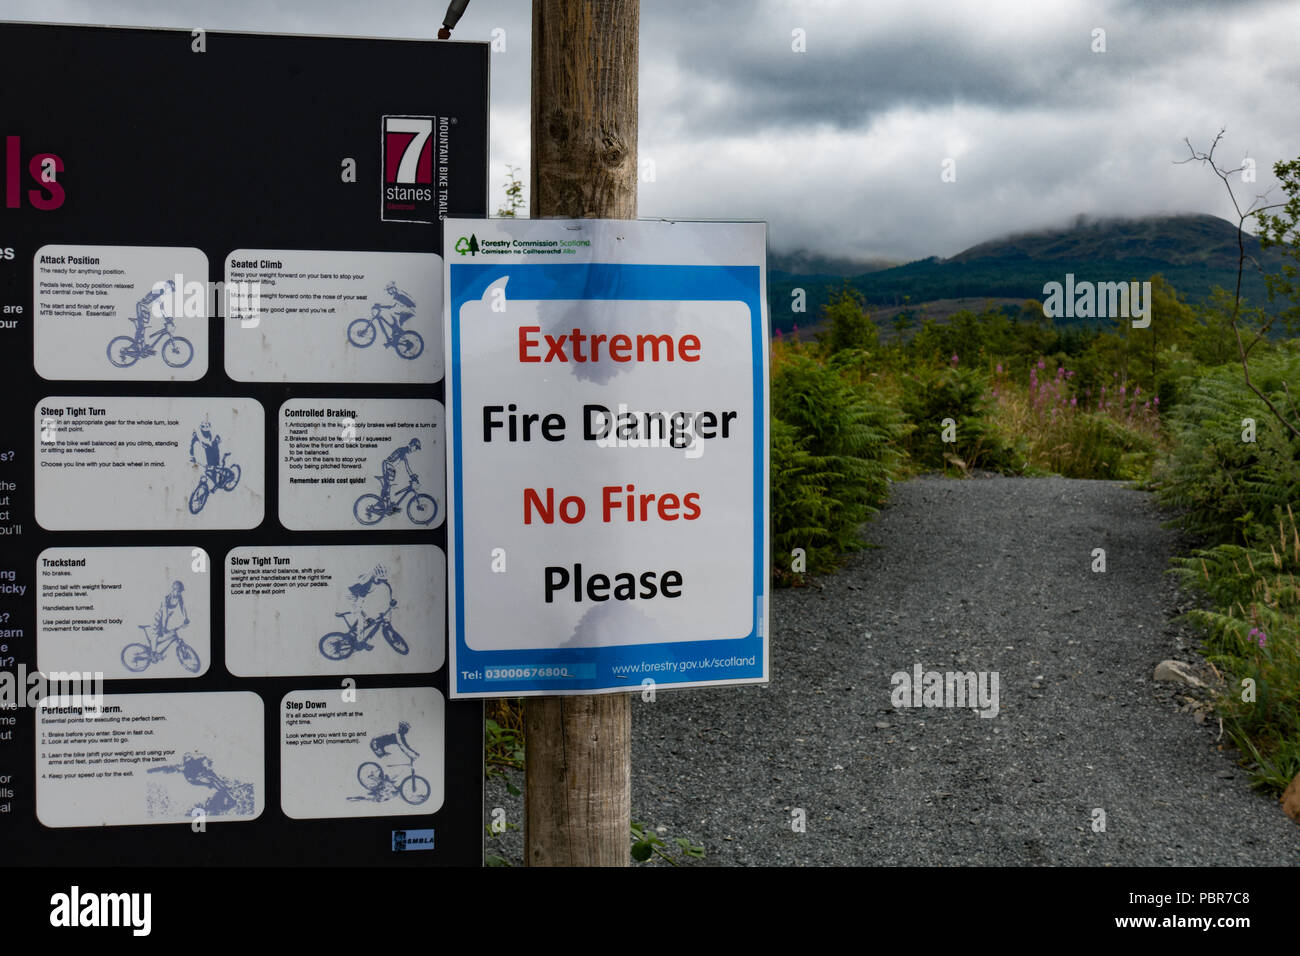 Fire danger sign Galloway Forest. Scotland Stock Photo